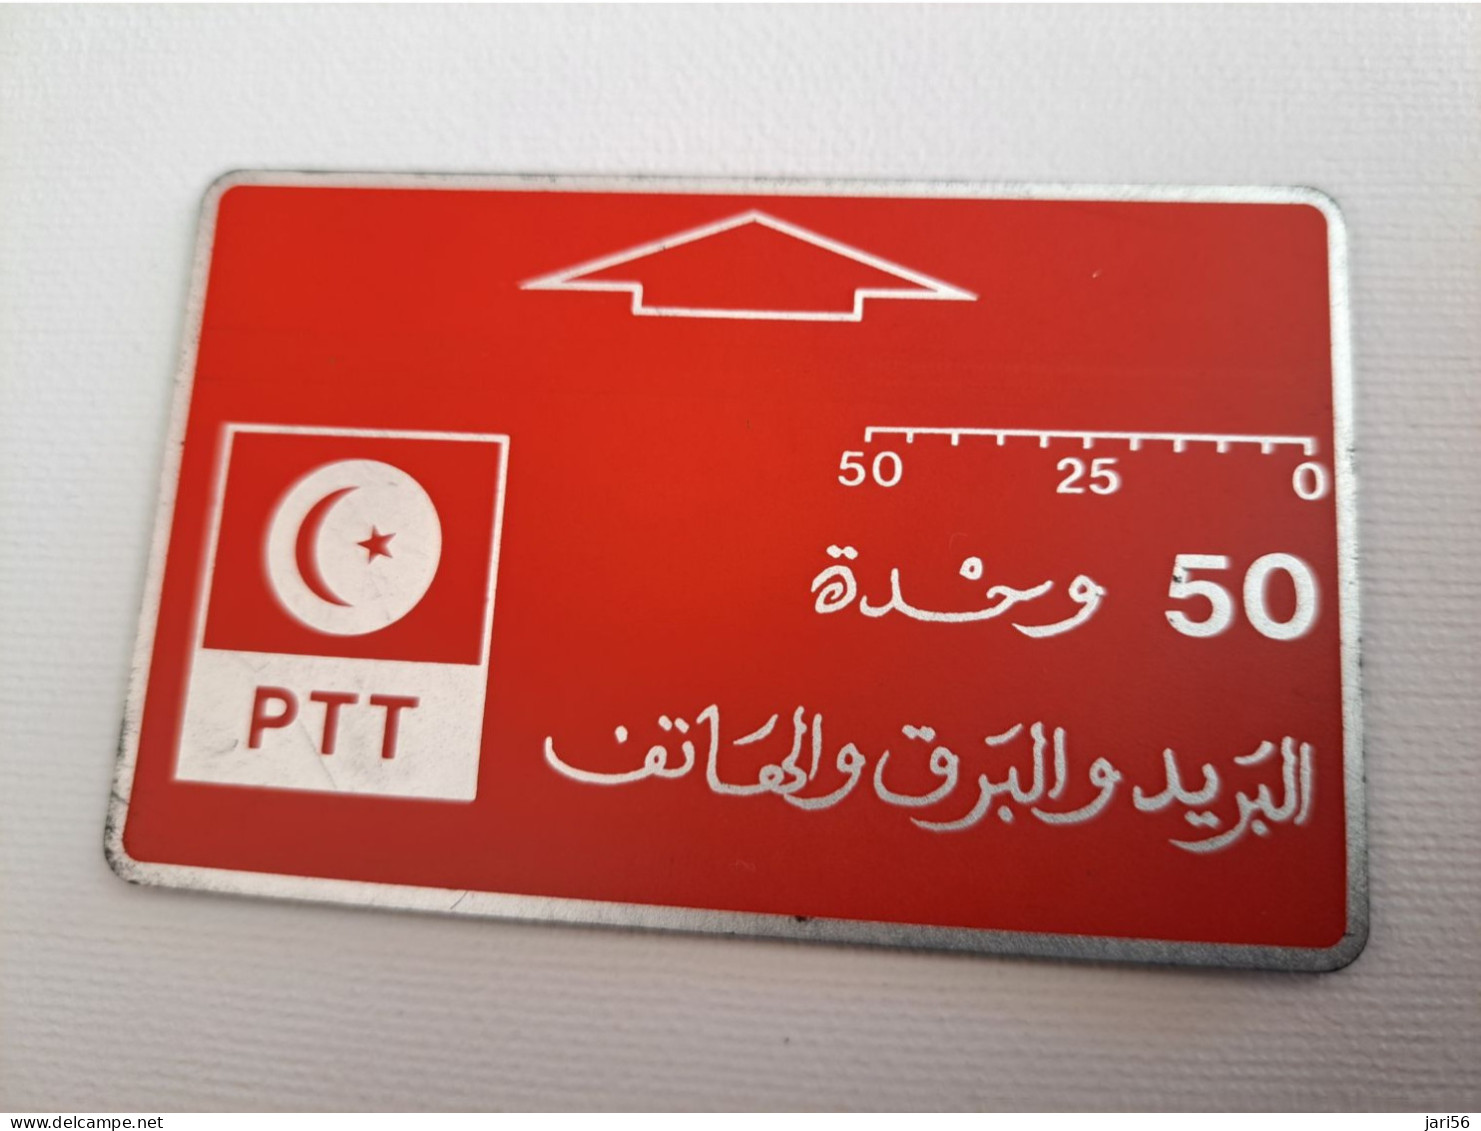 TUNESIA   L&G CARD 50 UNITS /NO NOTCH/ FIRST ISSUE / T10G /     MINT CARD     ** 13518** - Tunisia